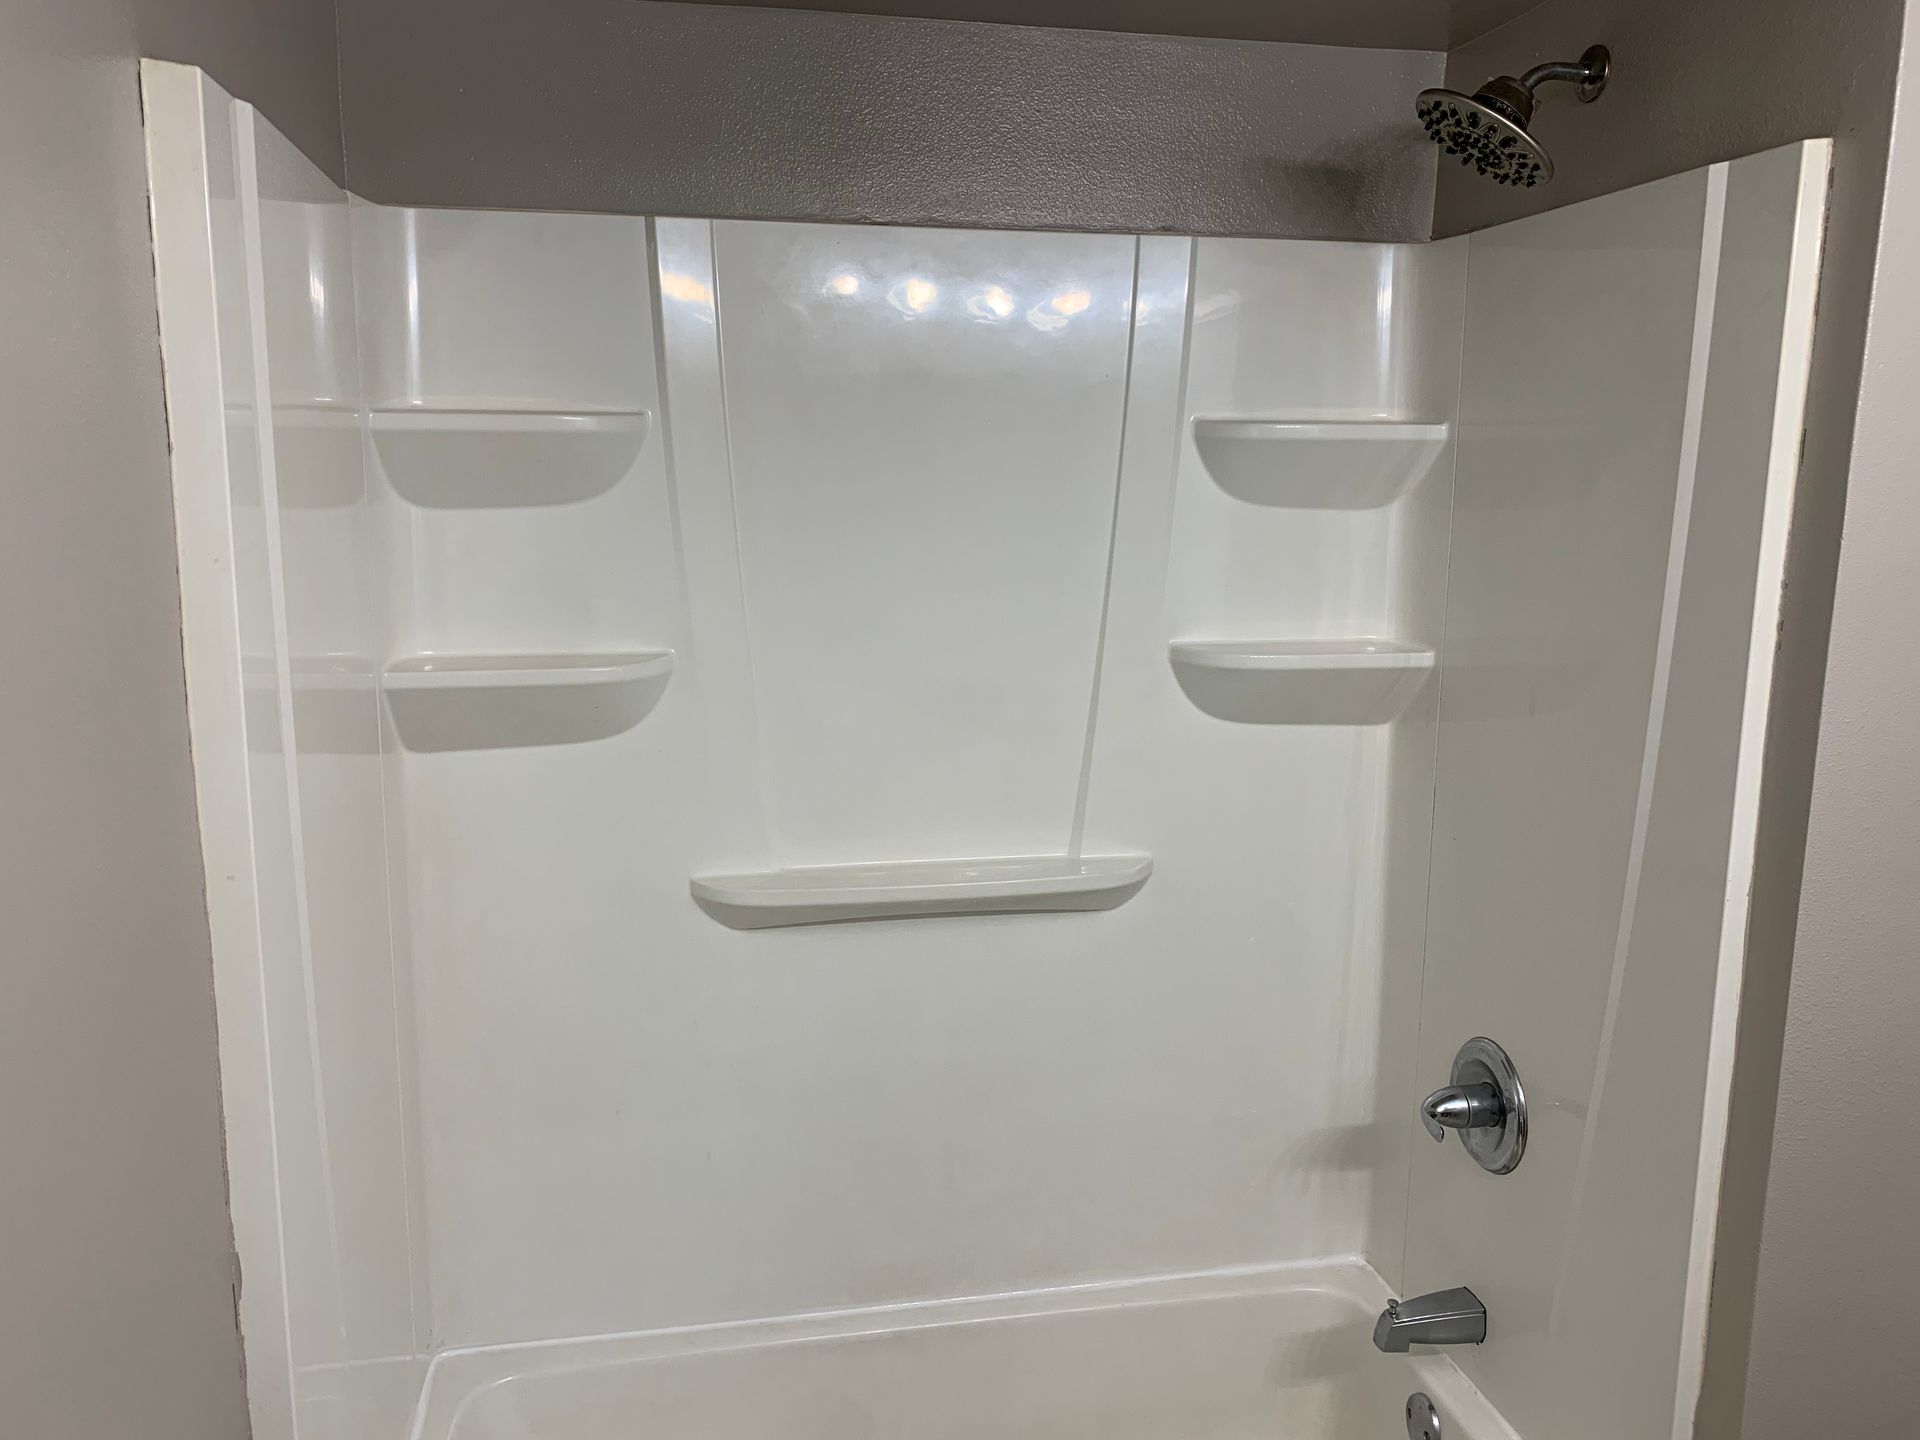 A bathroom with a bathtub , shower , and shelves.